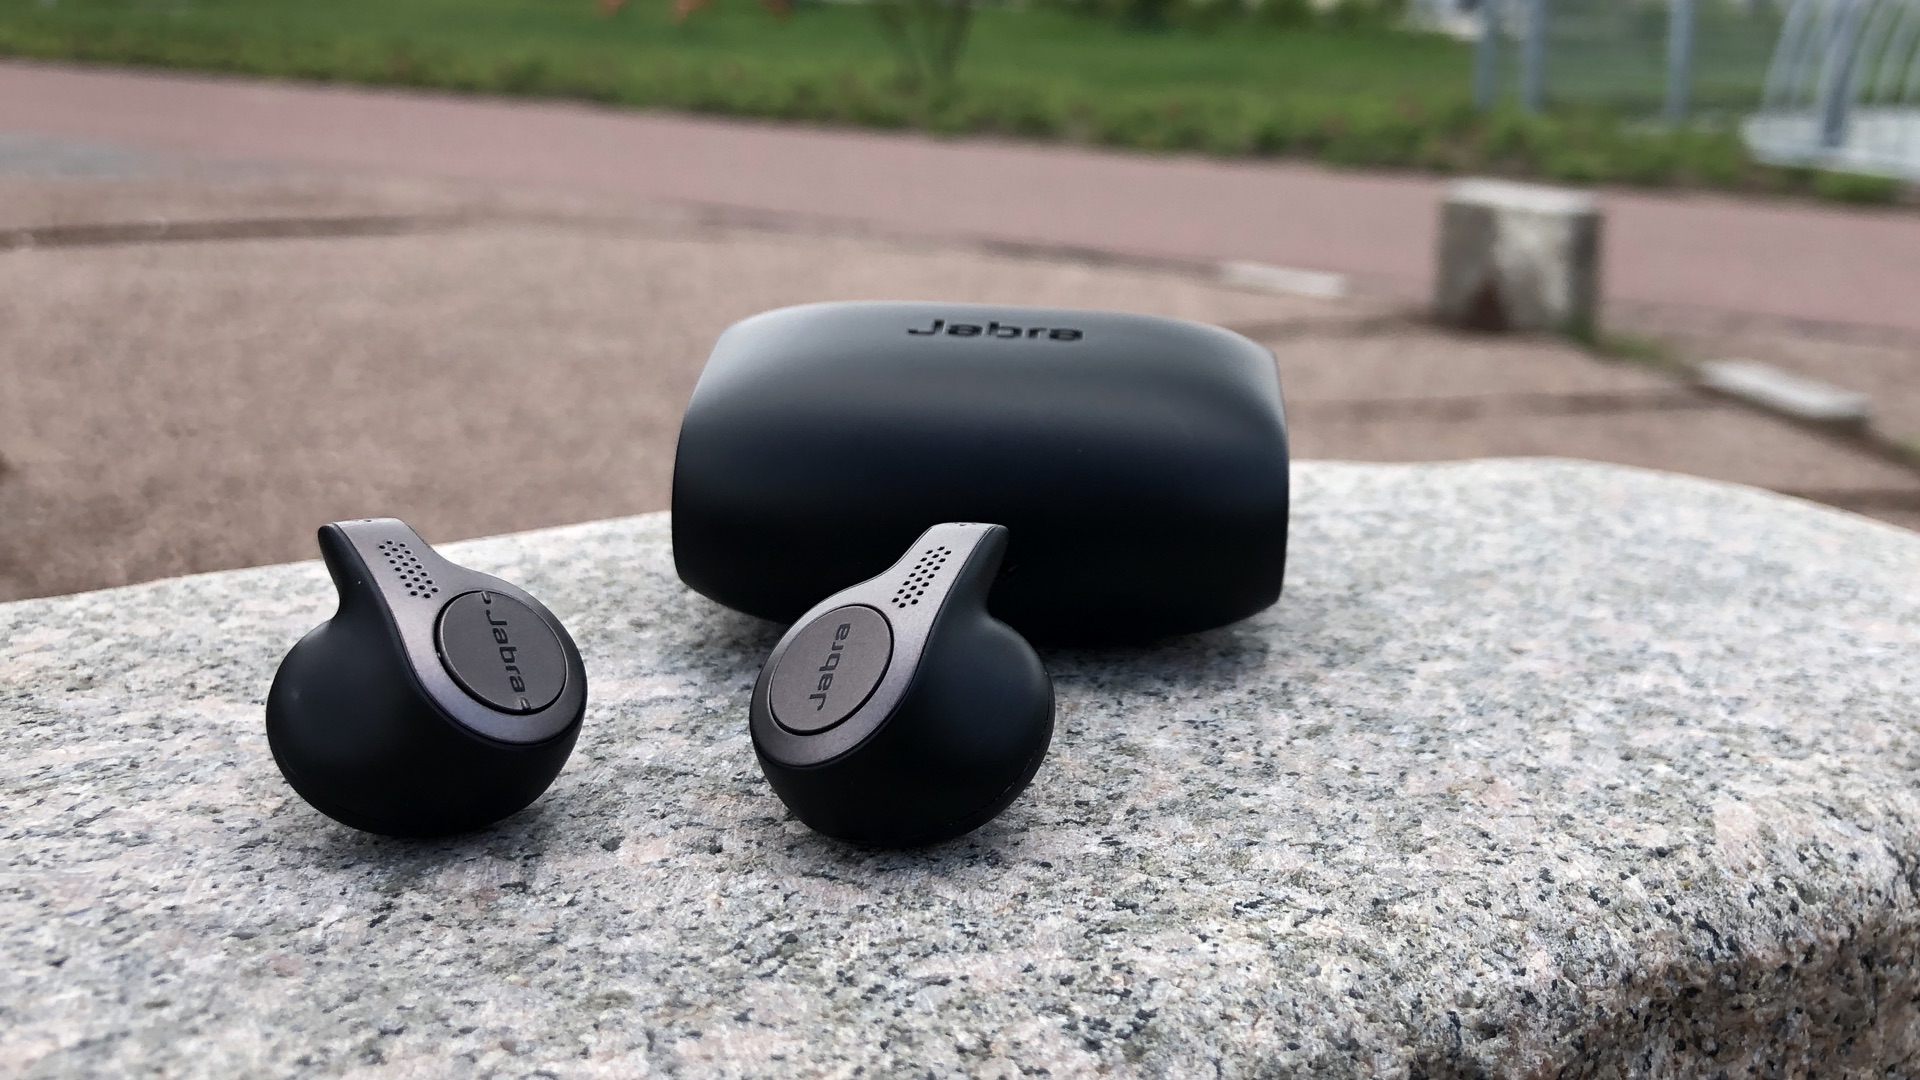 Jabra Elite 5 wireless earbuds review